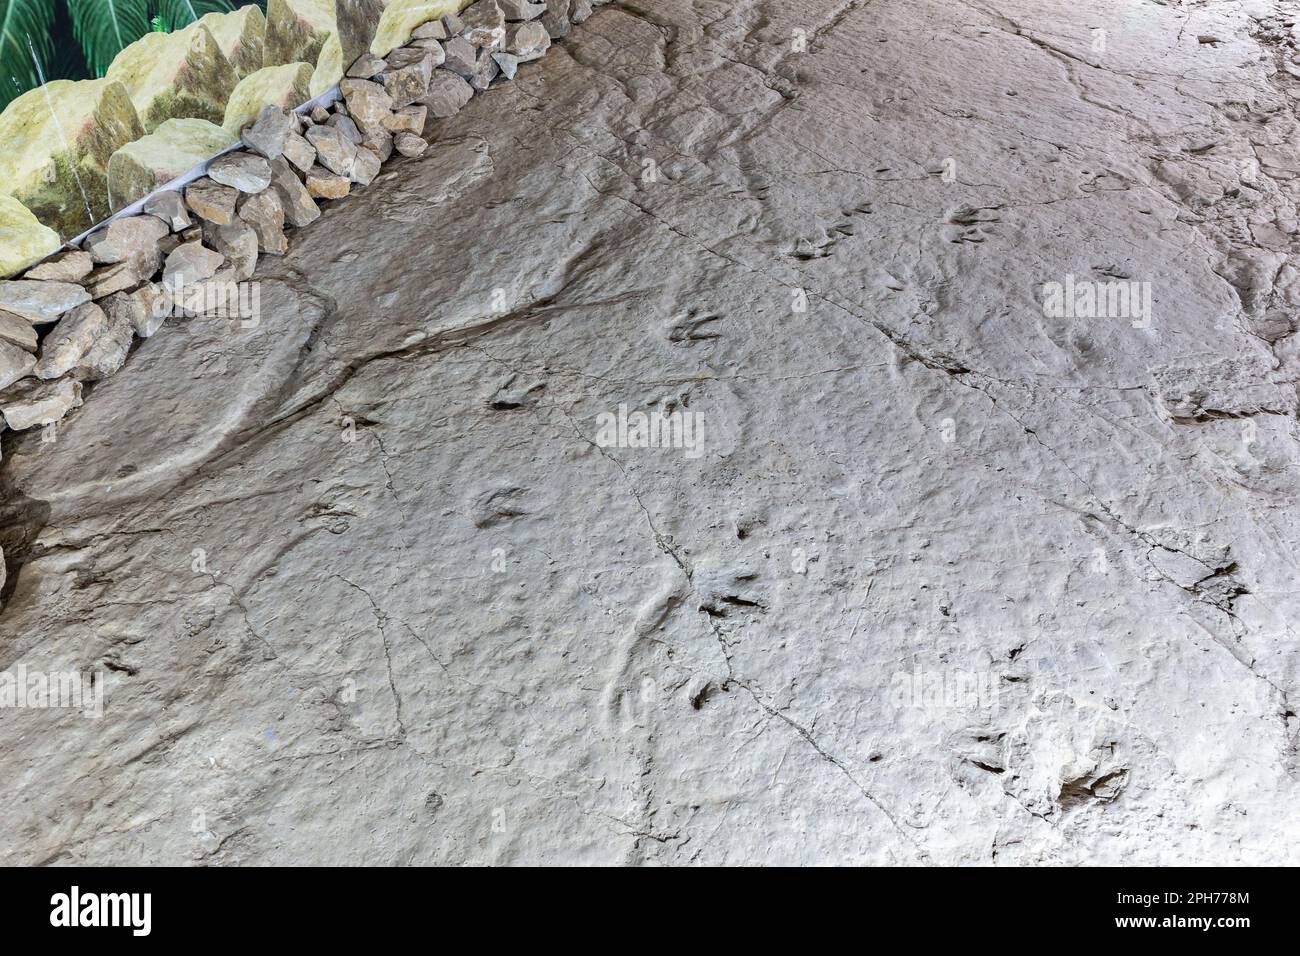 Well-preserved fossilized raptor, bird-like dinosaur three-fingered footprints on a rock in Sataplia Strict Nature Reserve, Georgia. Stock Photo